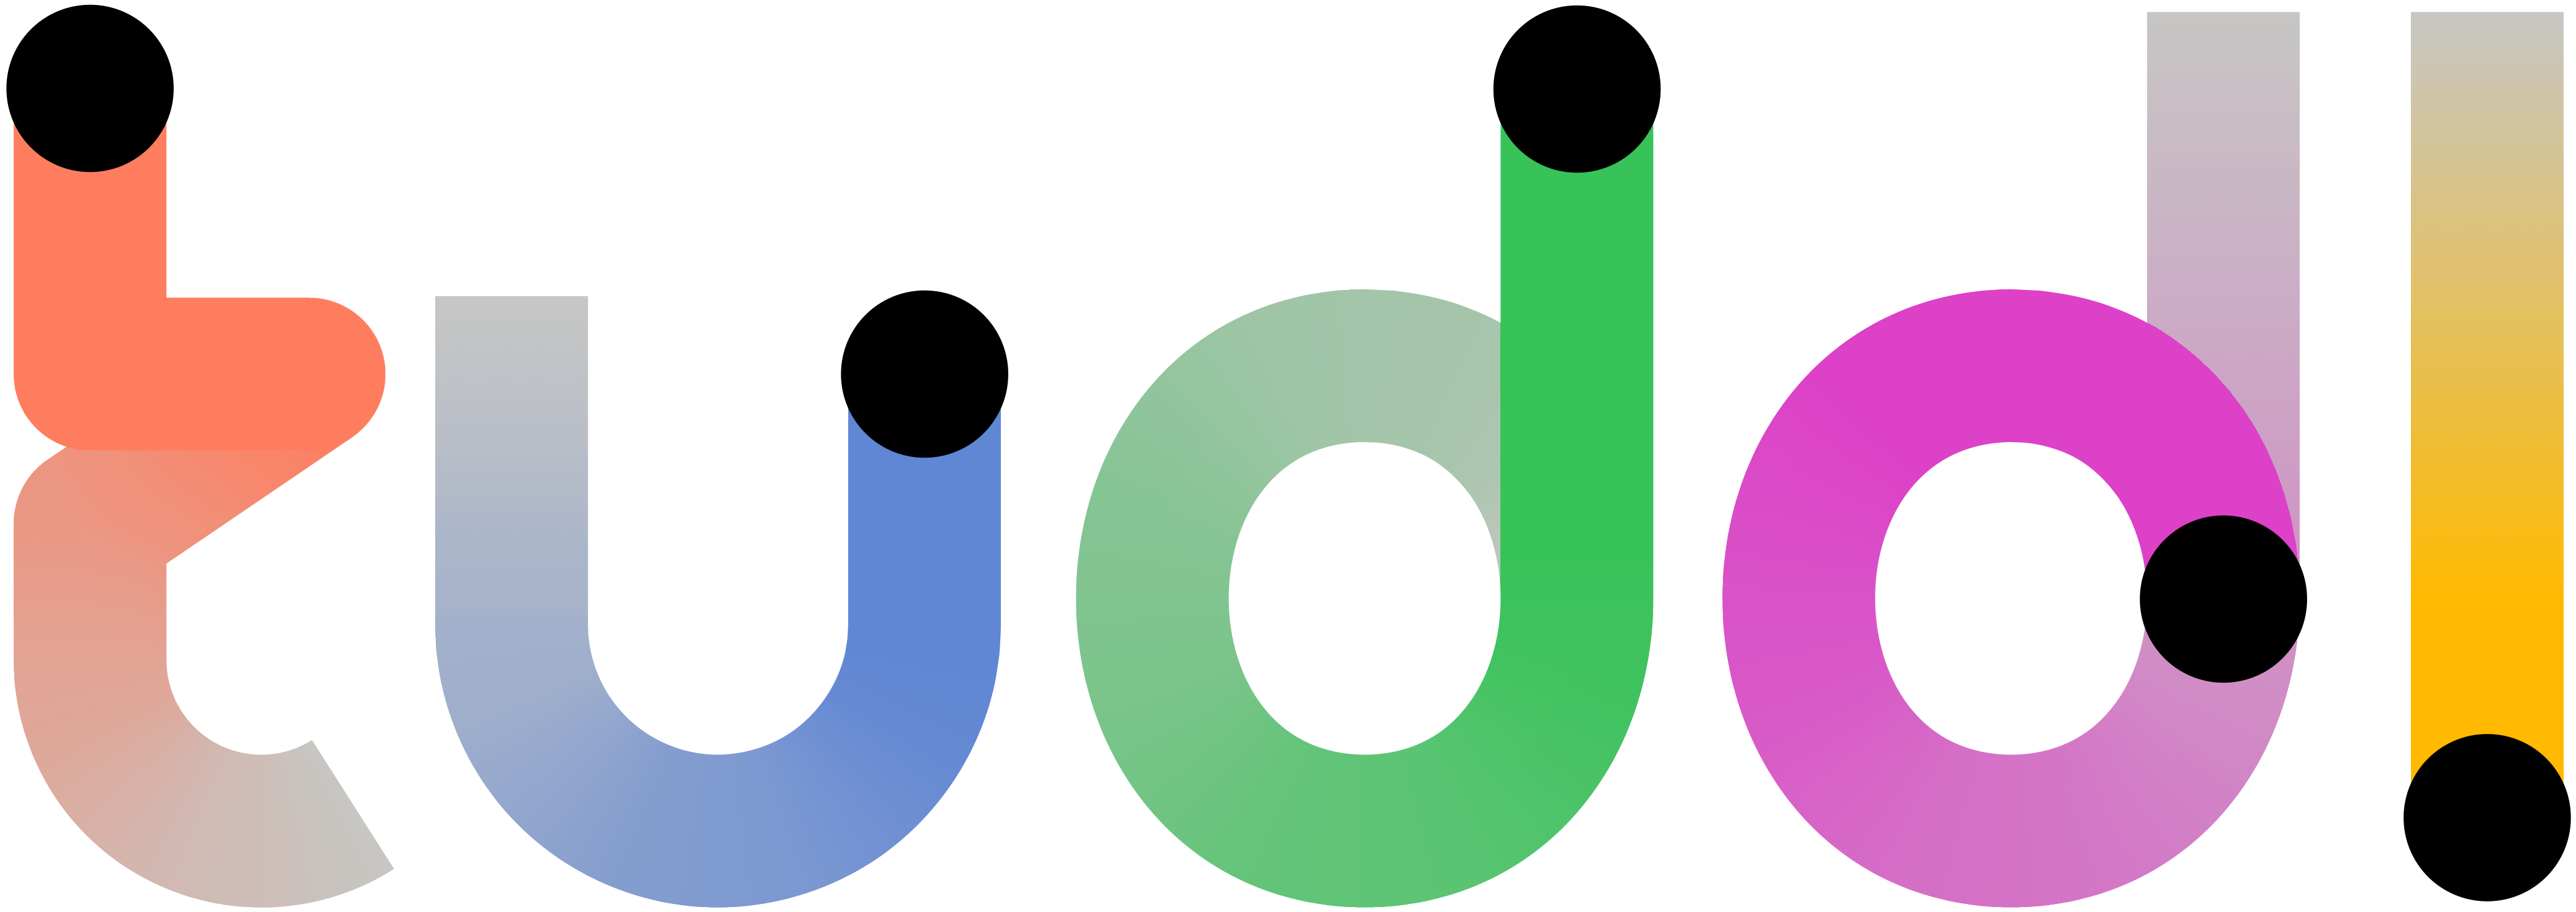 Tuddl logo